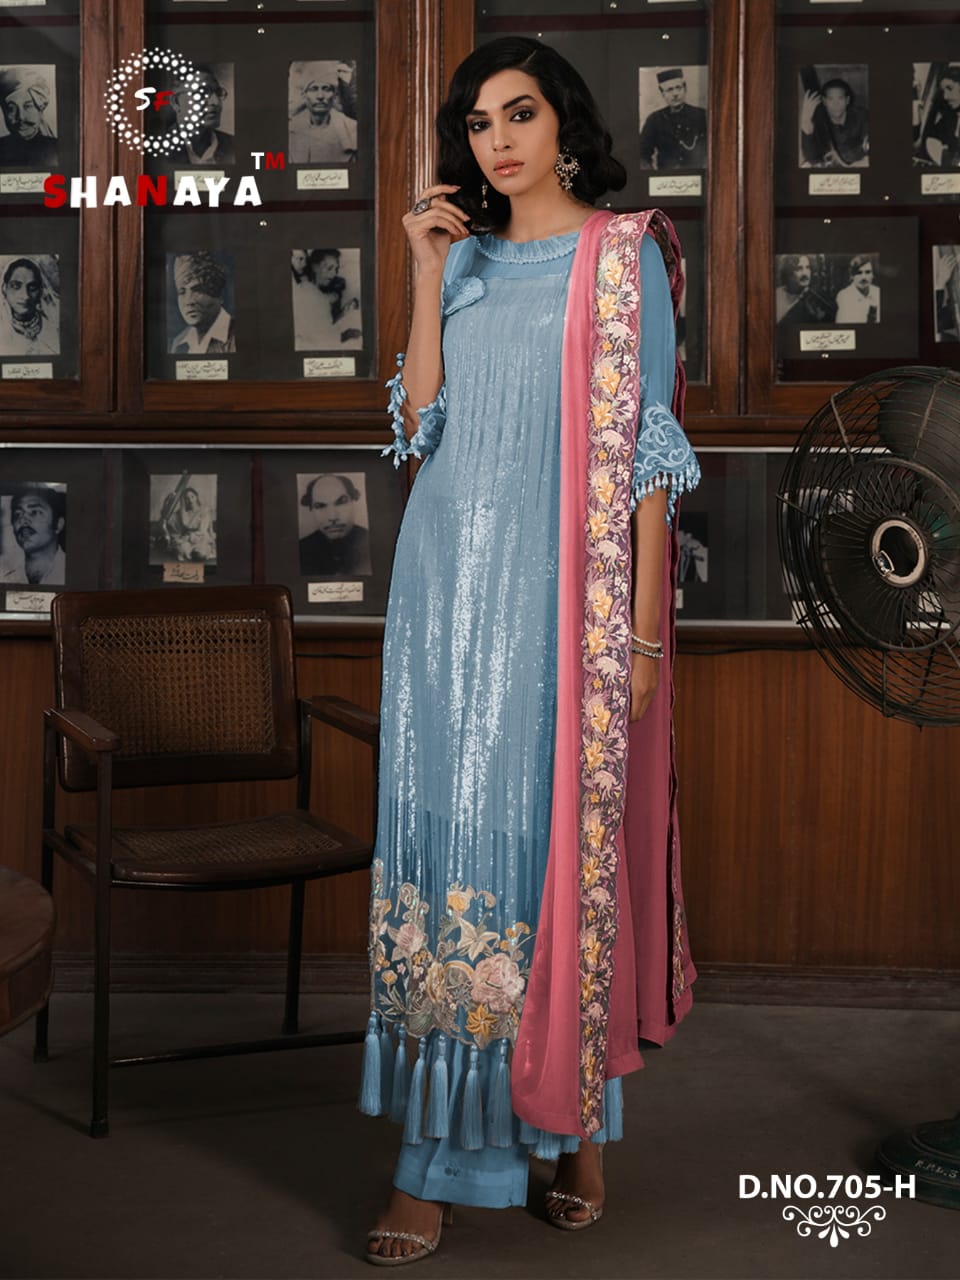 Shanaya Designer Pakistani Replica Suits